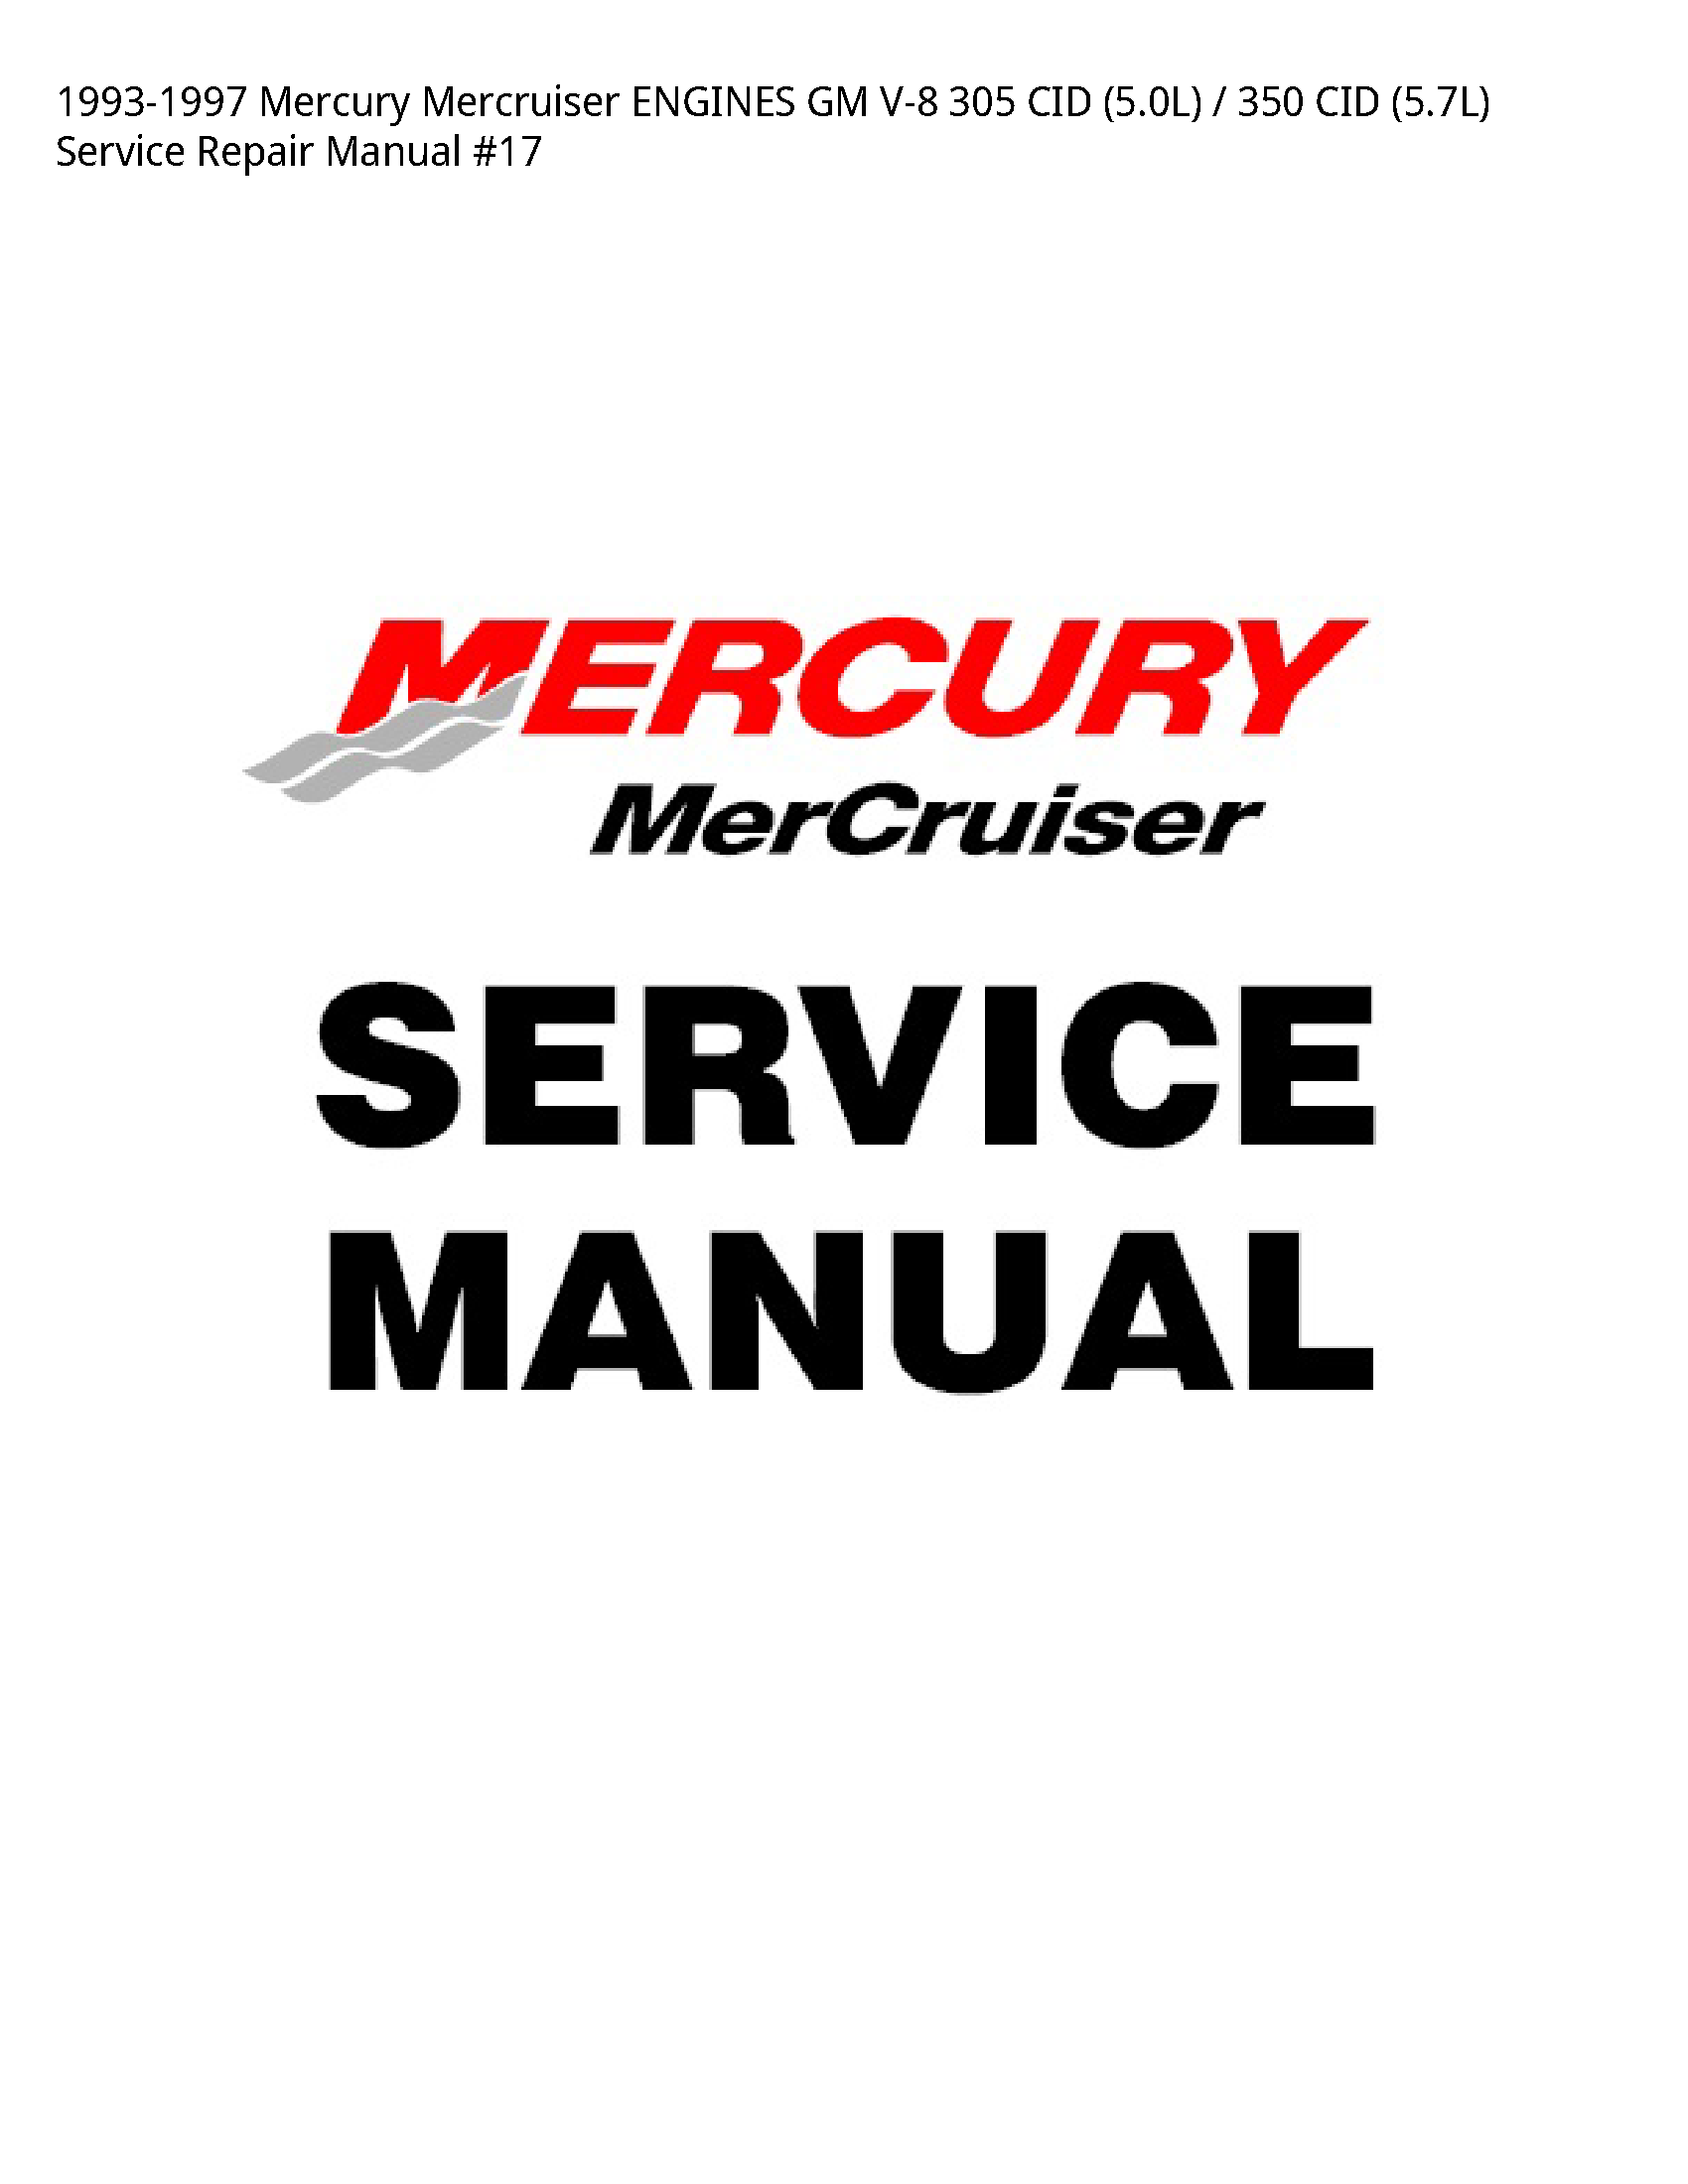 Mercury V-8 Mercruiser ENGINES GM CID CID manual